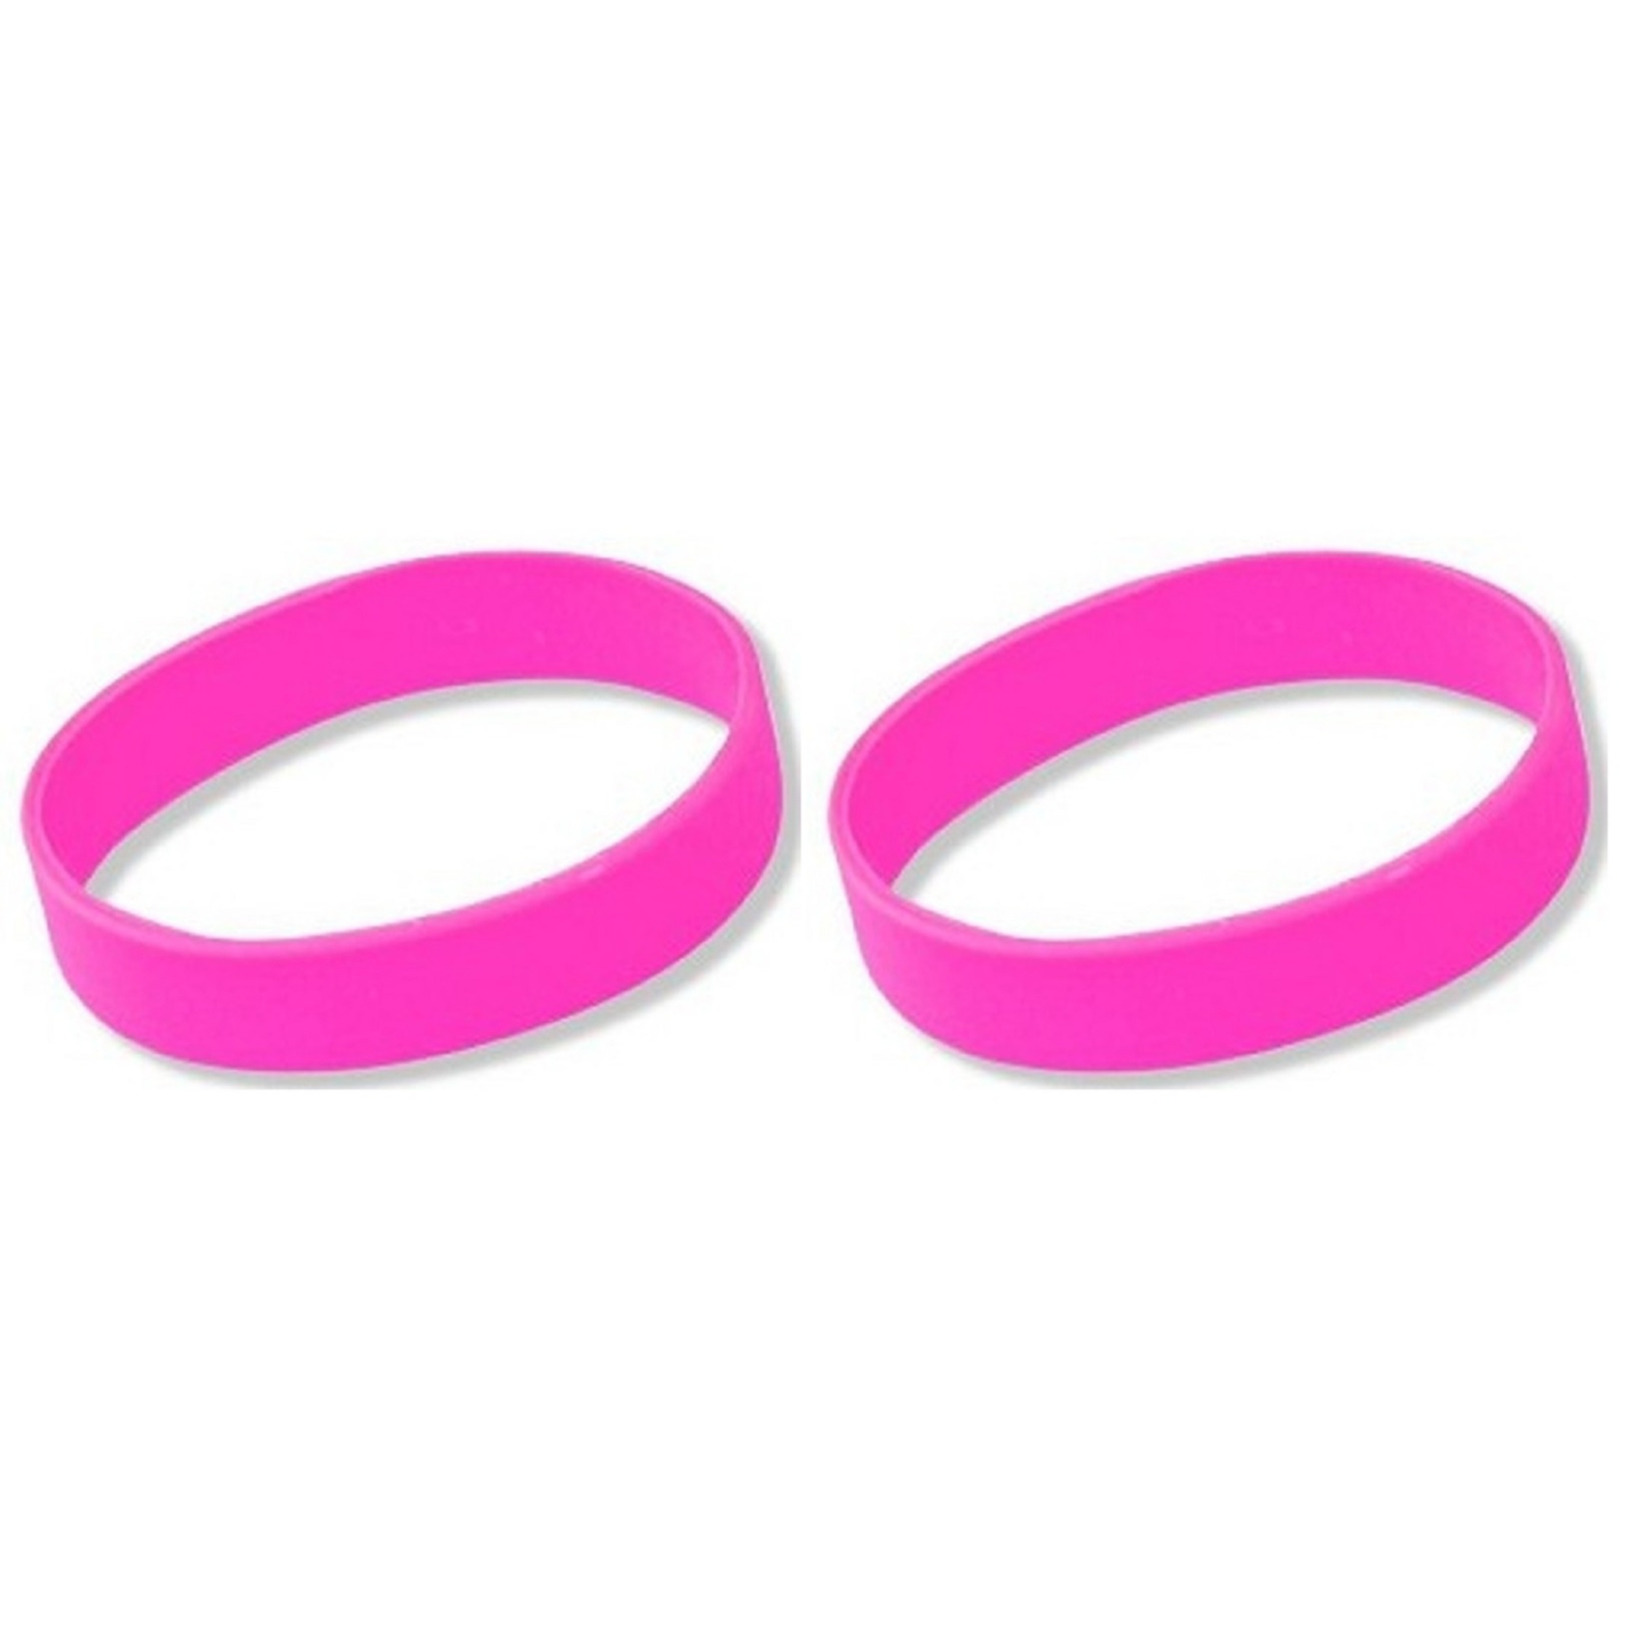 25x stuks siliconen armband roze